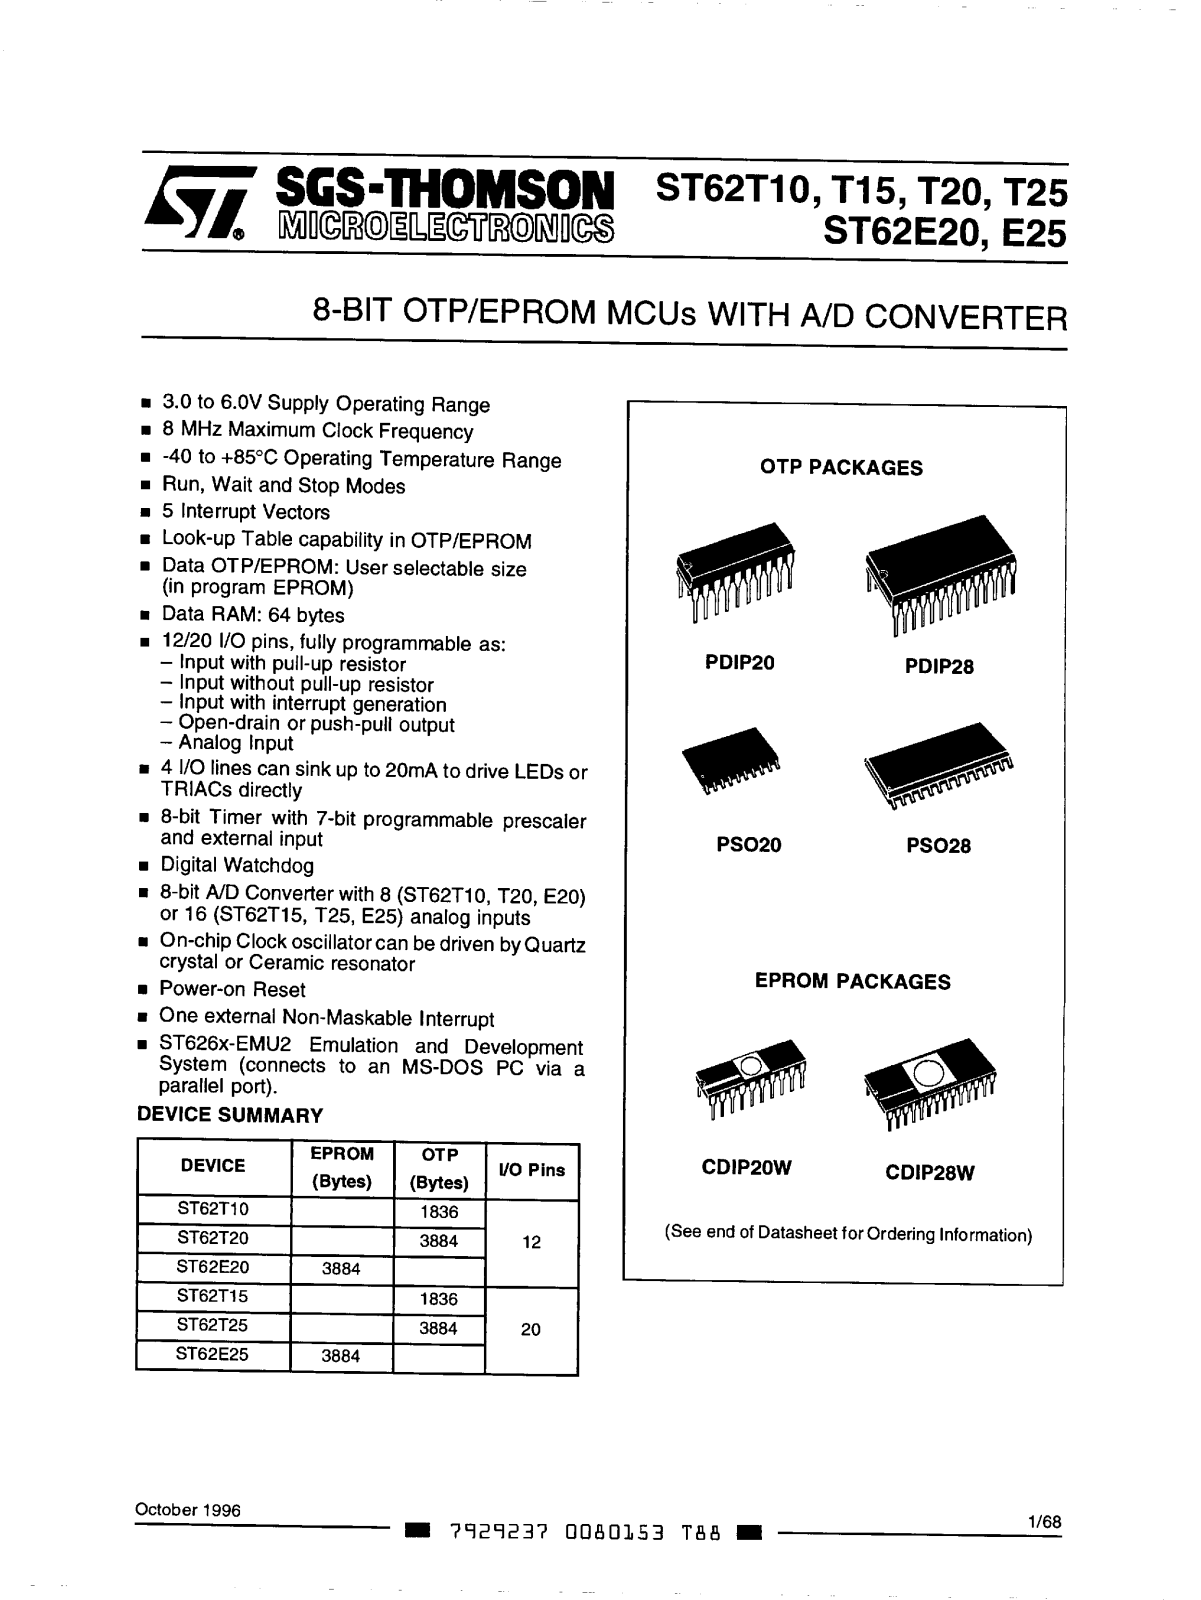 SGS Thomson Microelectronics ST62T15B6-SWD, ST62T25B6-SWD, ST62E20F1-SWD, ST62E20F1-HWD Datasheet